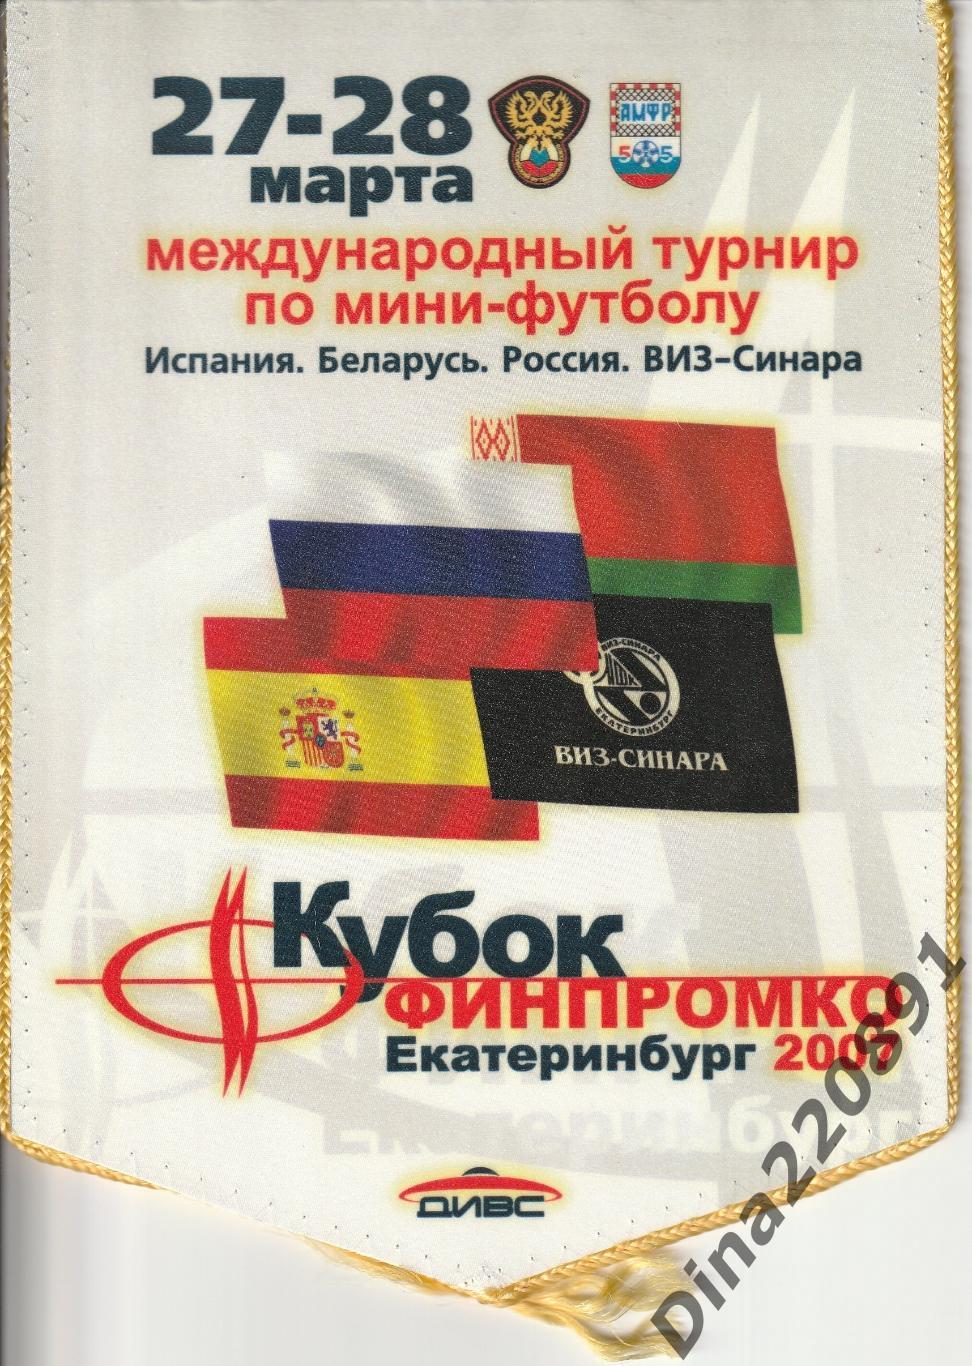 МТКубок Финпромко 2007 г.Екатеринбург. ПРОГРАММА +ВЫМПЕЛ ТУРНИРА. 1